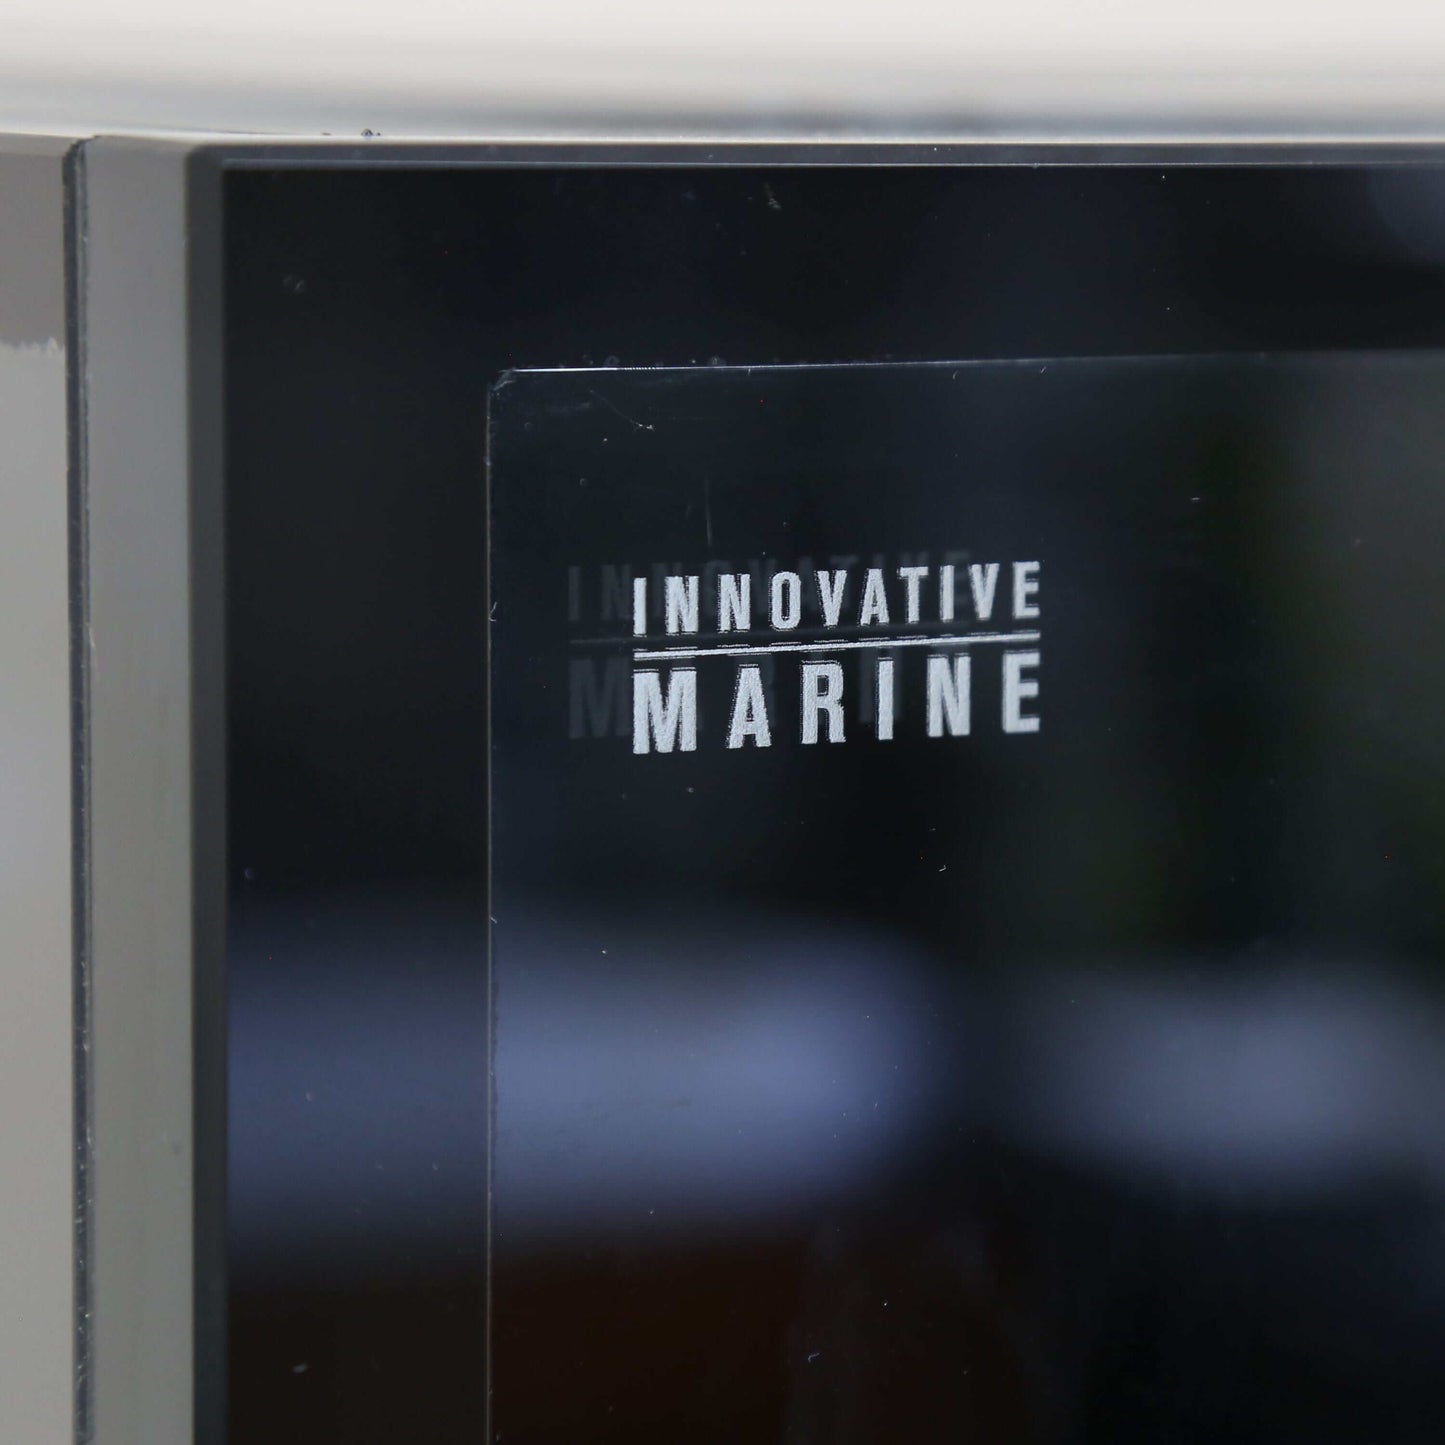 NUVO SR Pro 2 | 80 Gallon AIO Aquarium with APS Stand Included (White/Black) - Innovative Marine